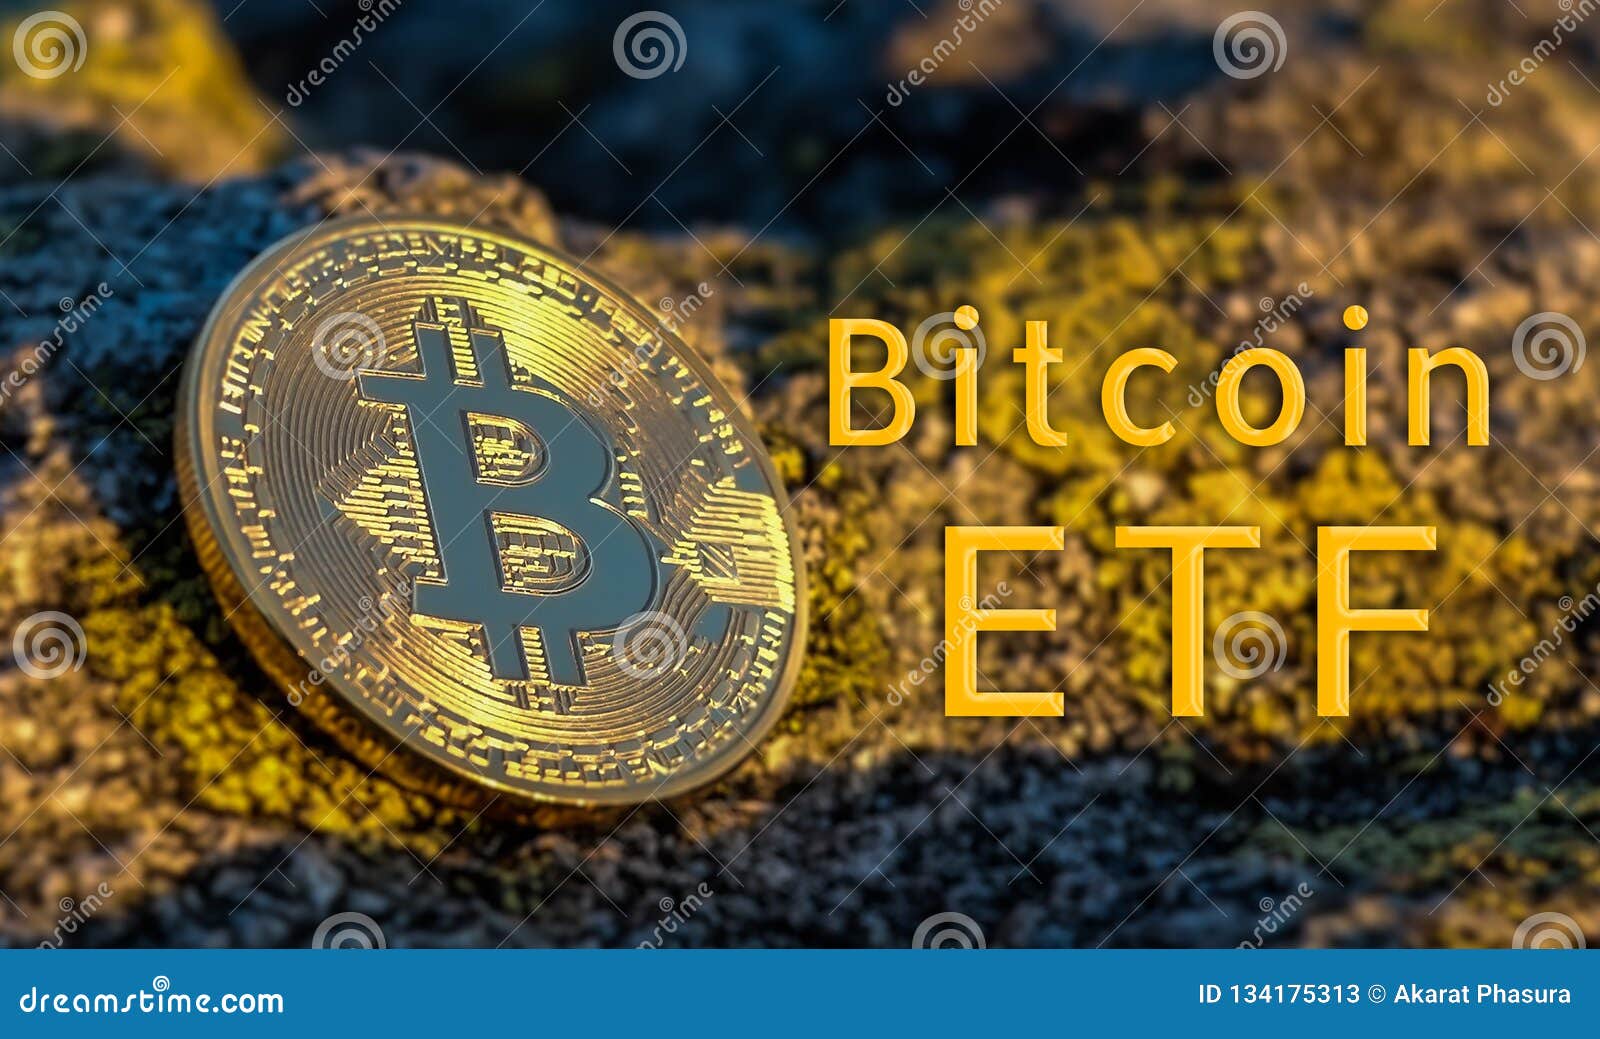 bitcoin investing etf